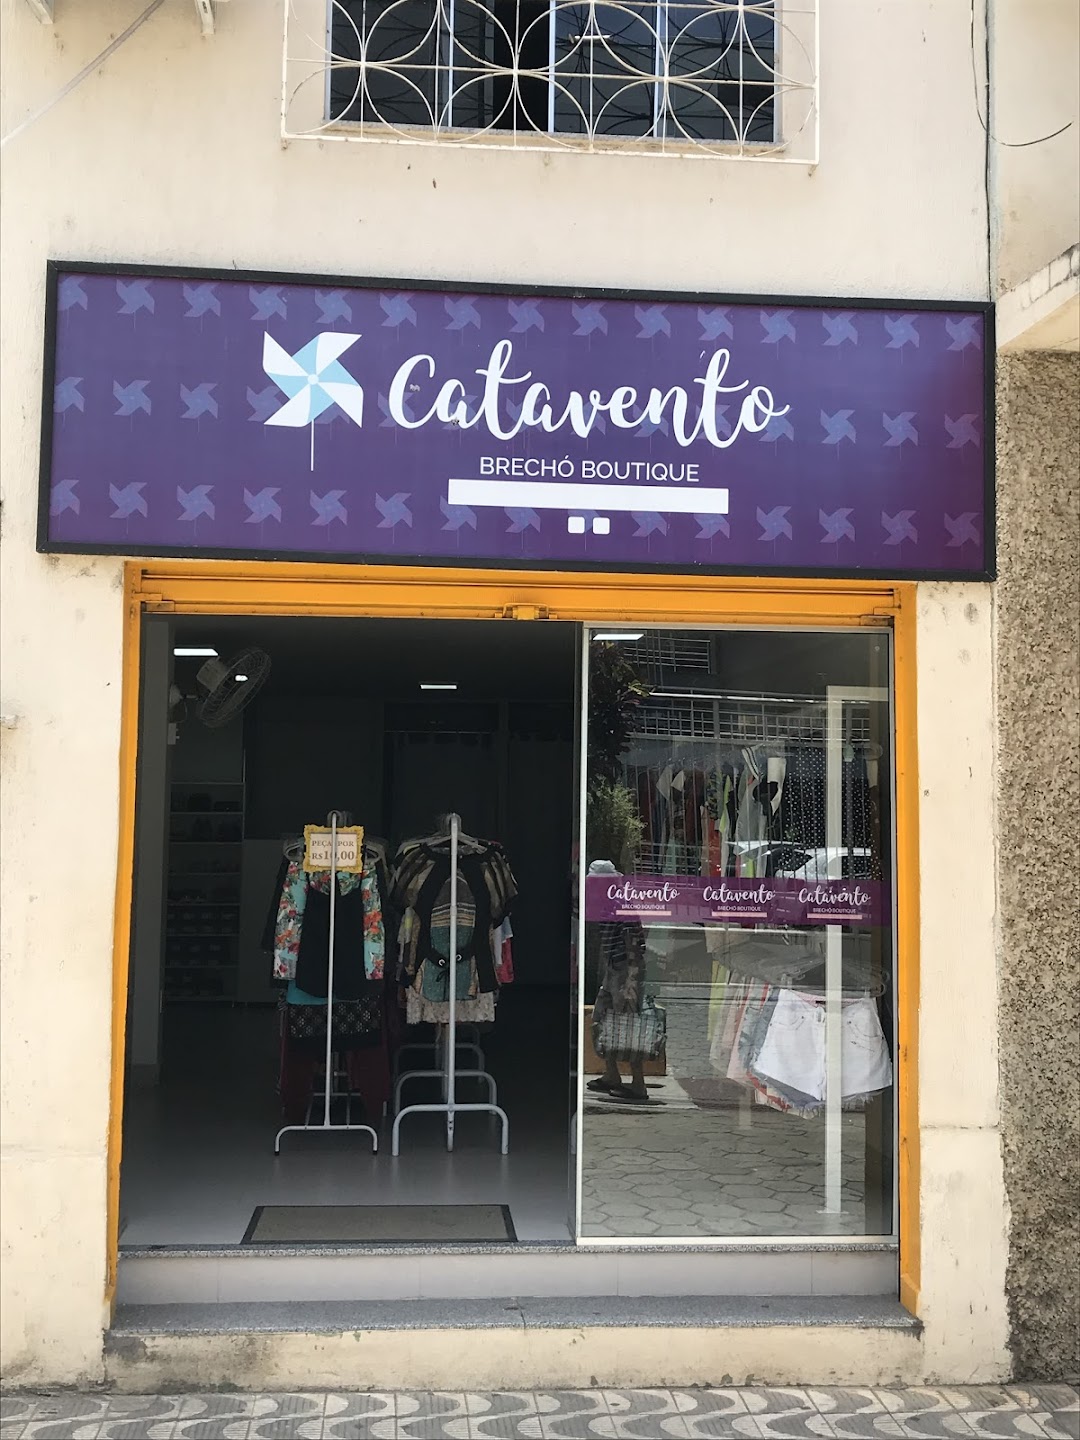 Catavento Brechó Boutique